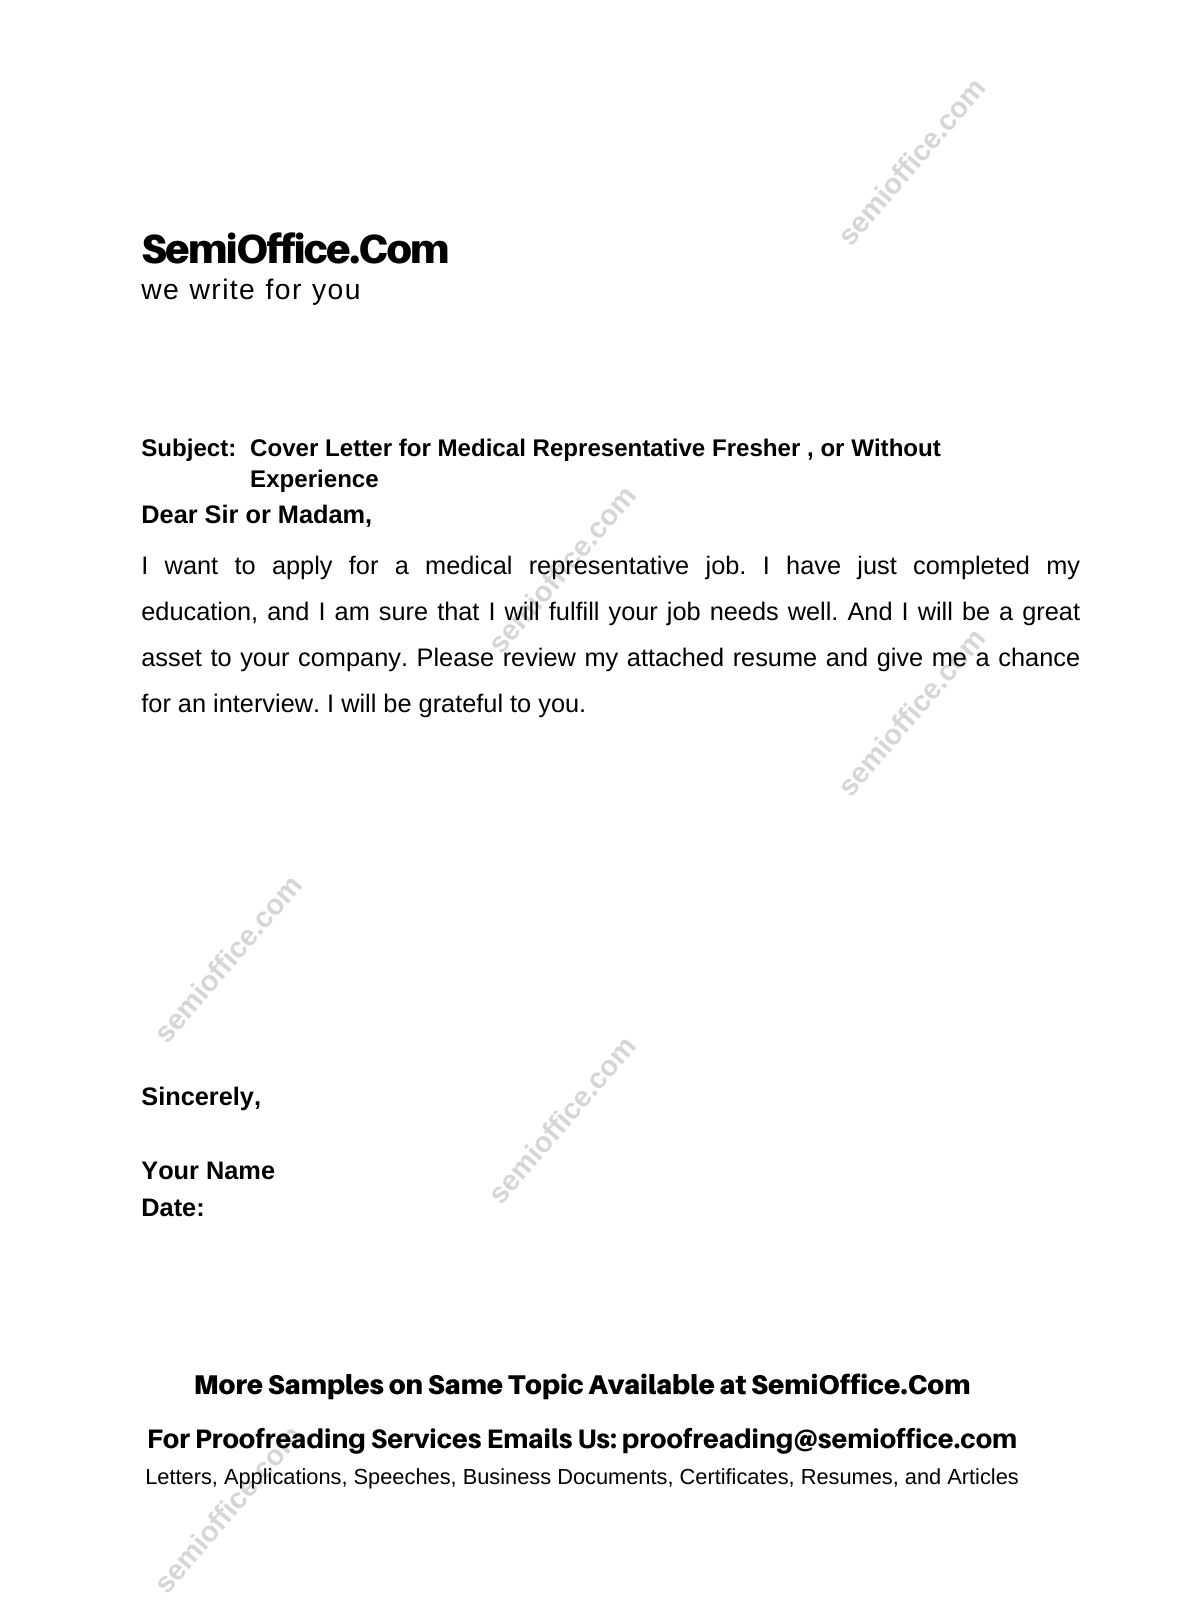 job application letter for medical representative